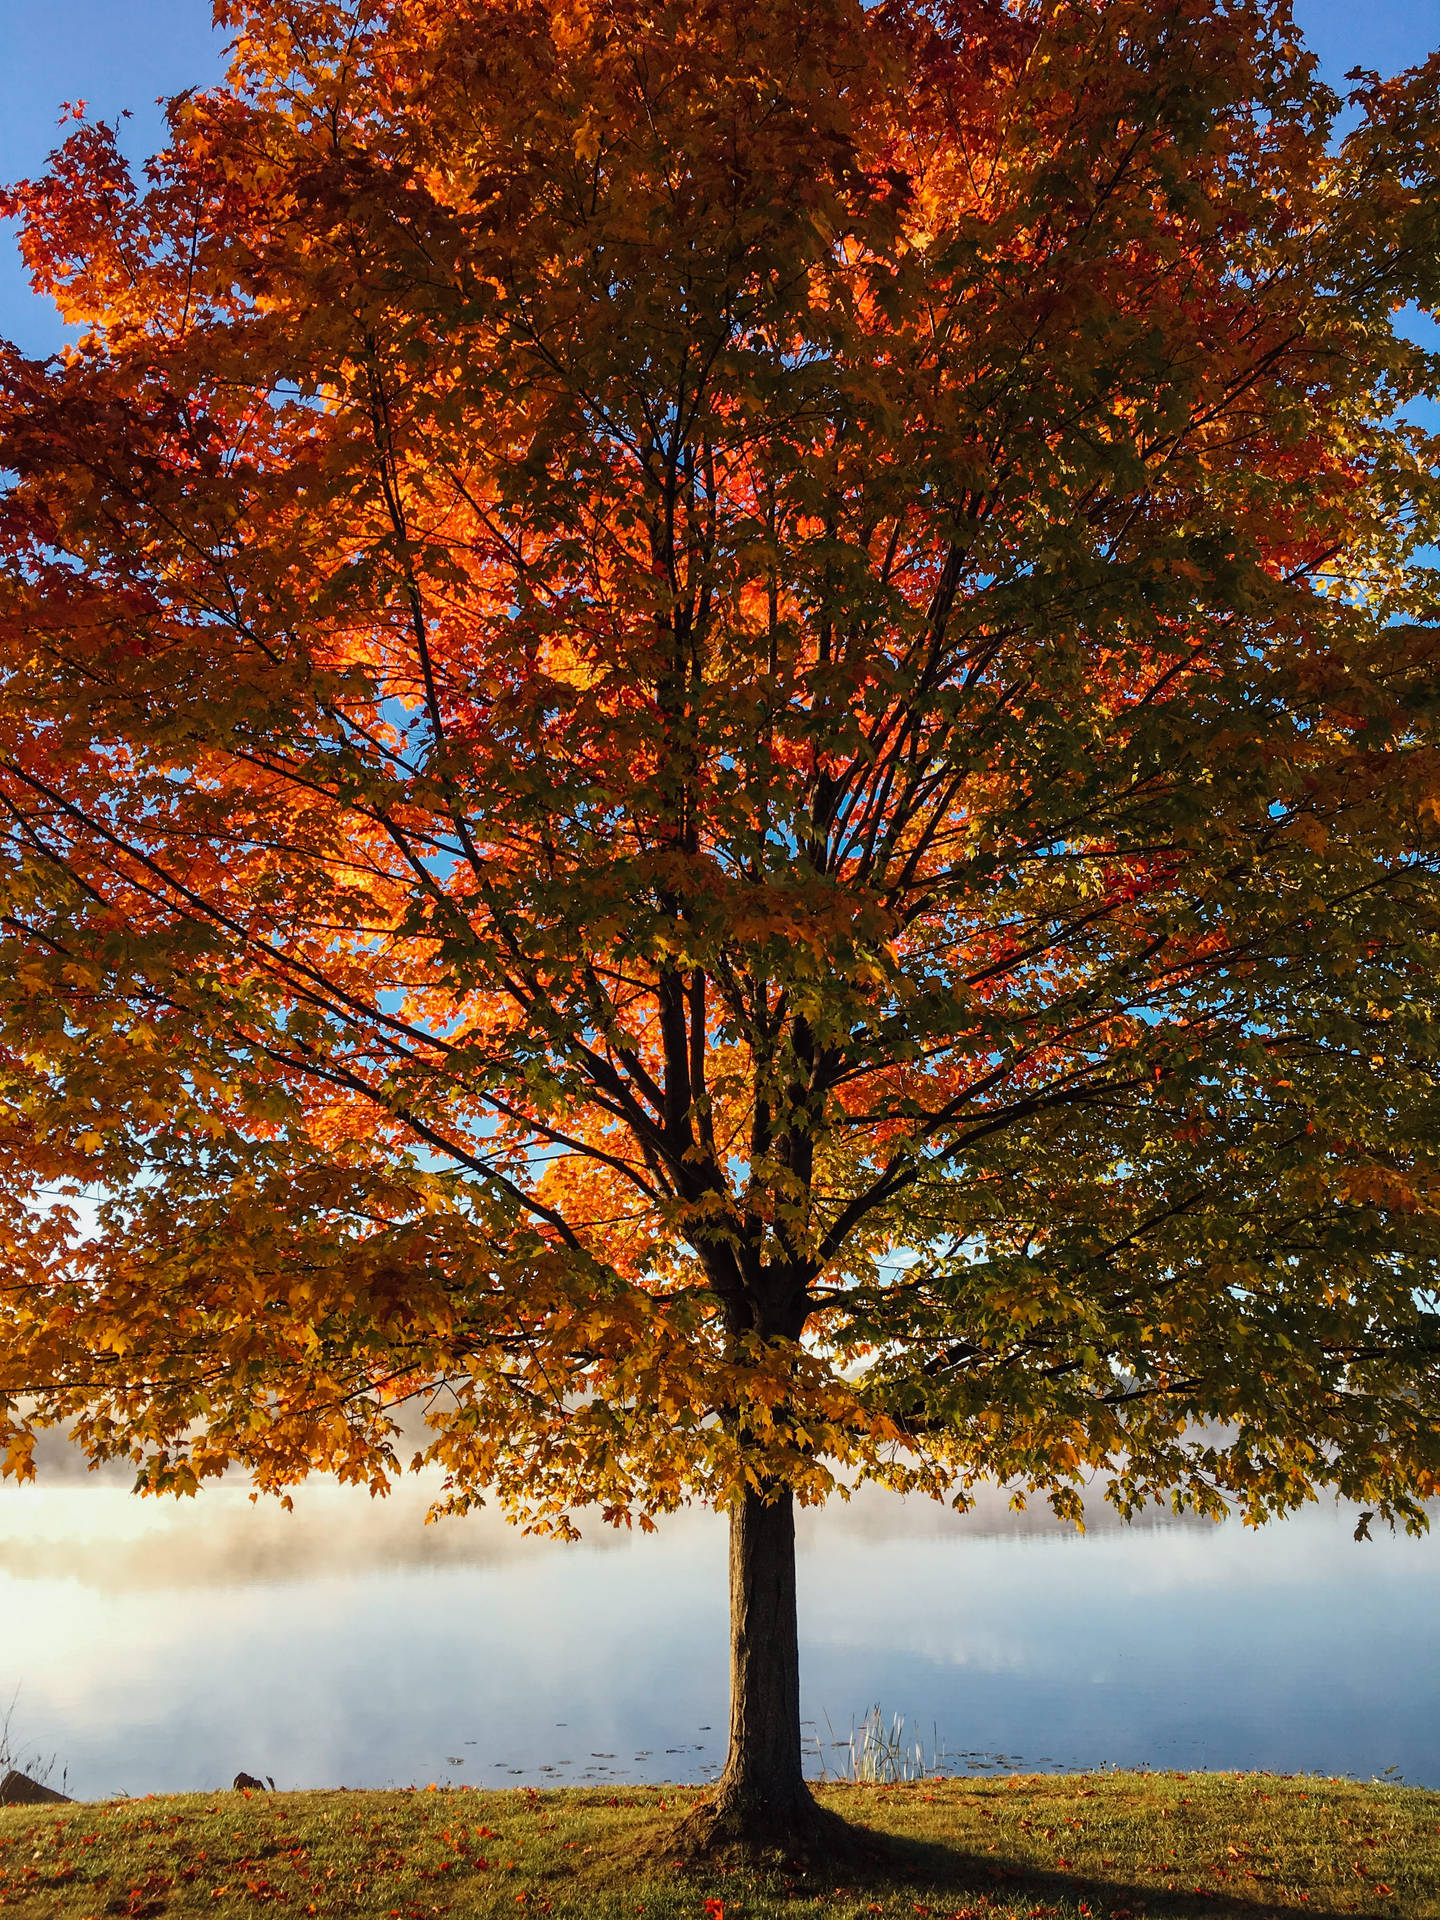 Caption: Serene iPhone Landscape Featuring Majestic Tree Wallpaper